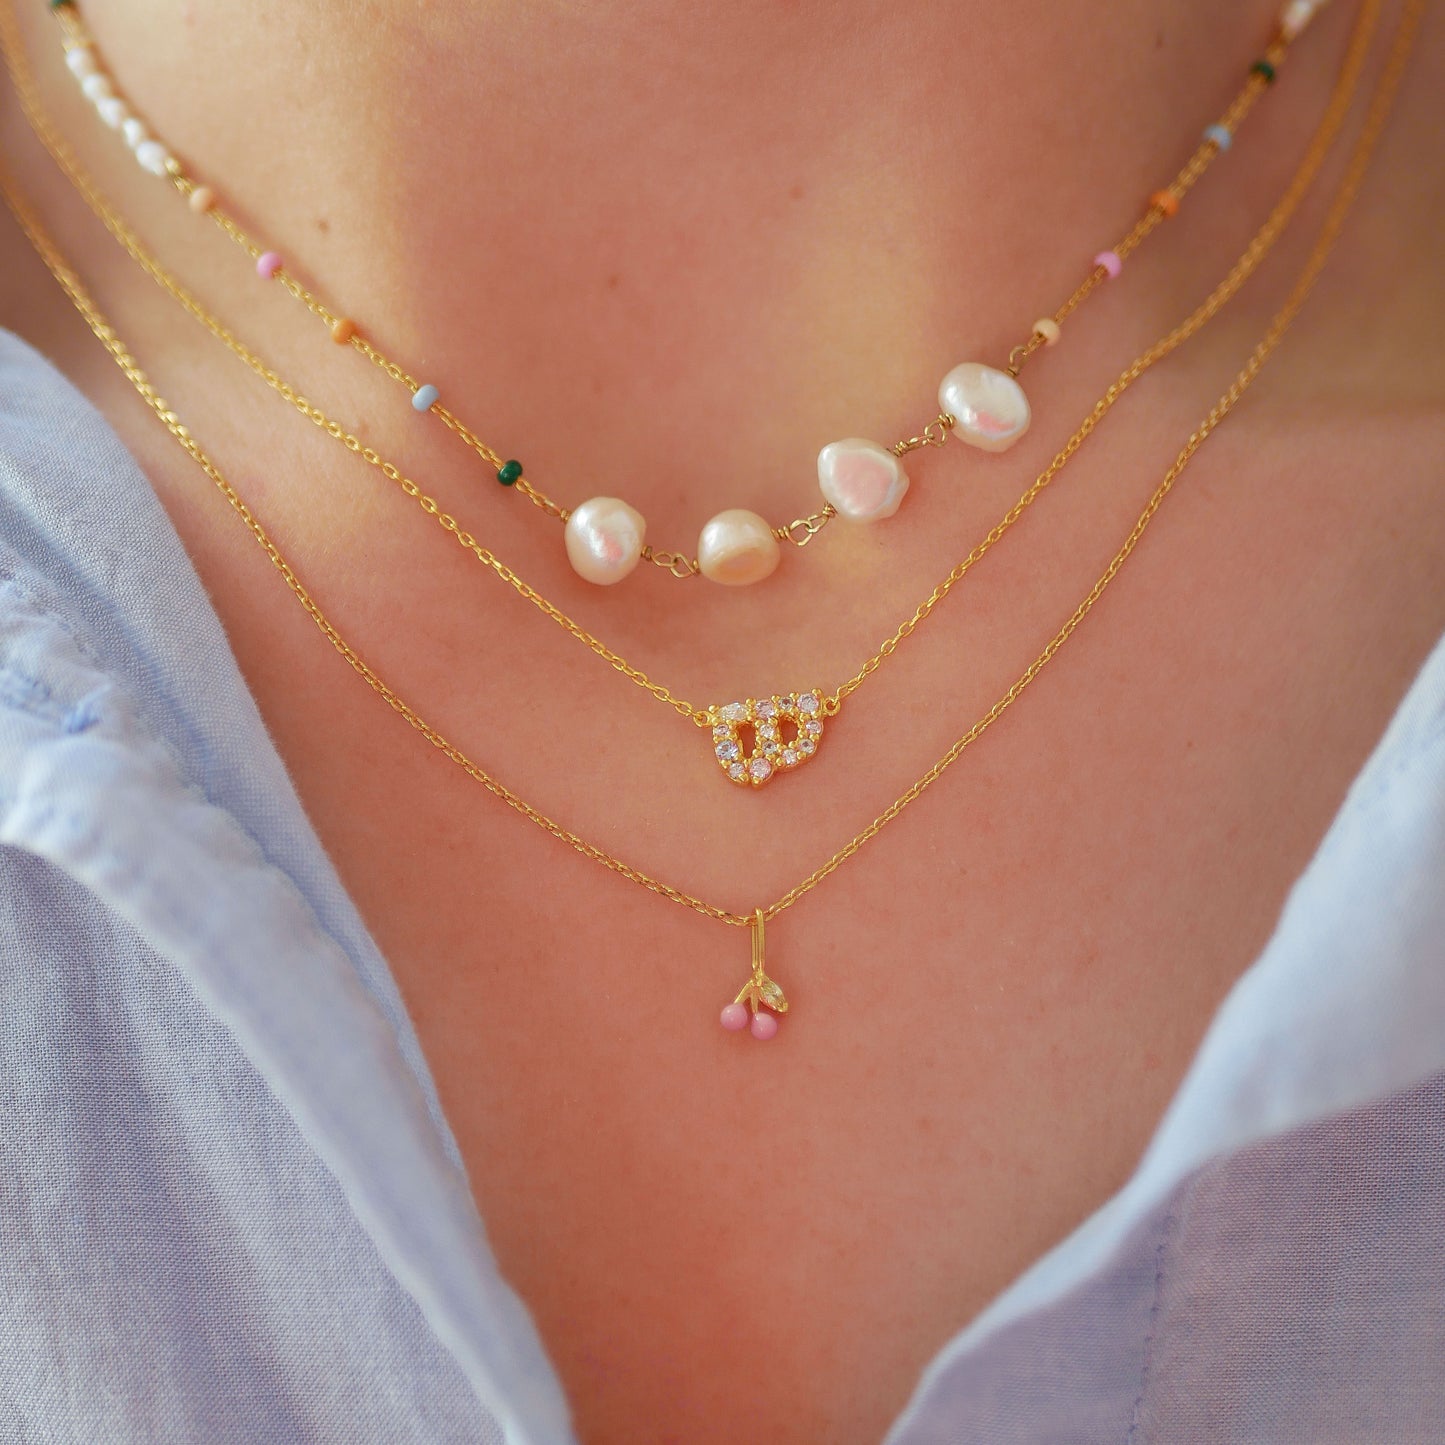 Bogstav halskæde i guld på en enkel og tynd guldkæde fra Enamel Copenhagen¨